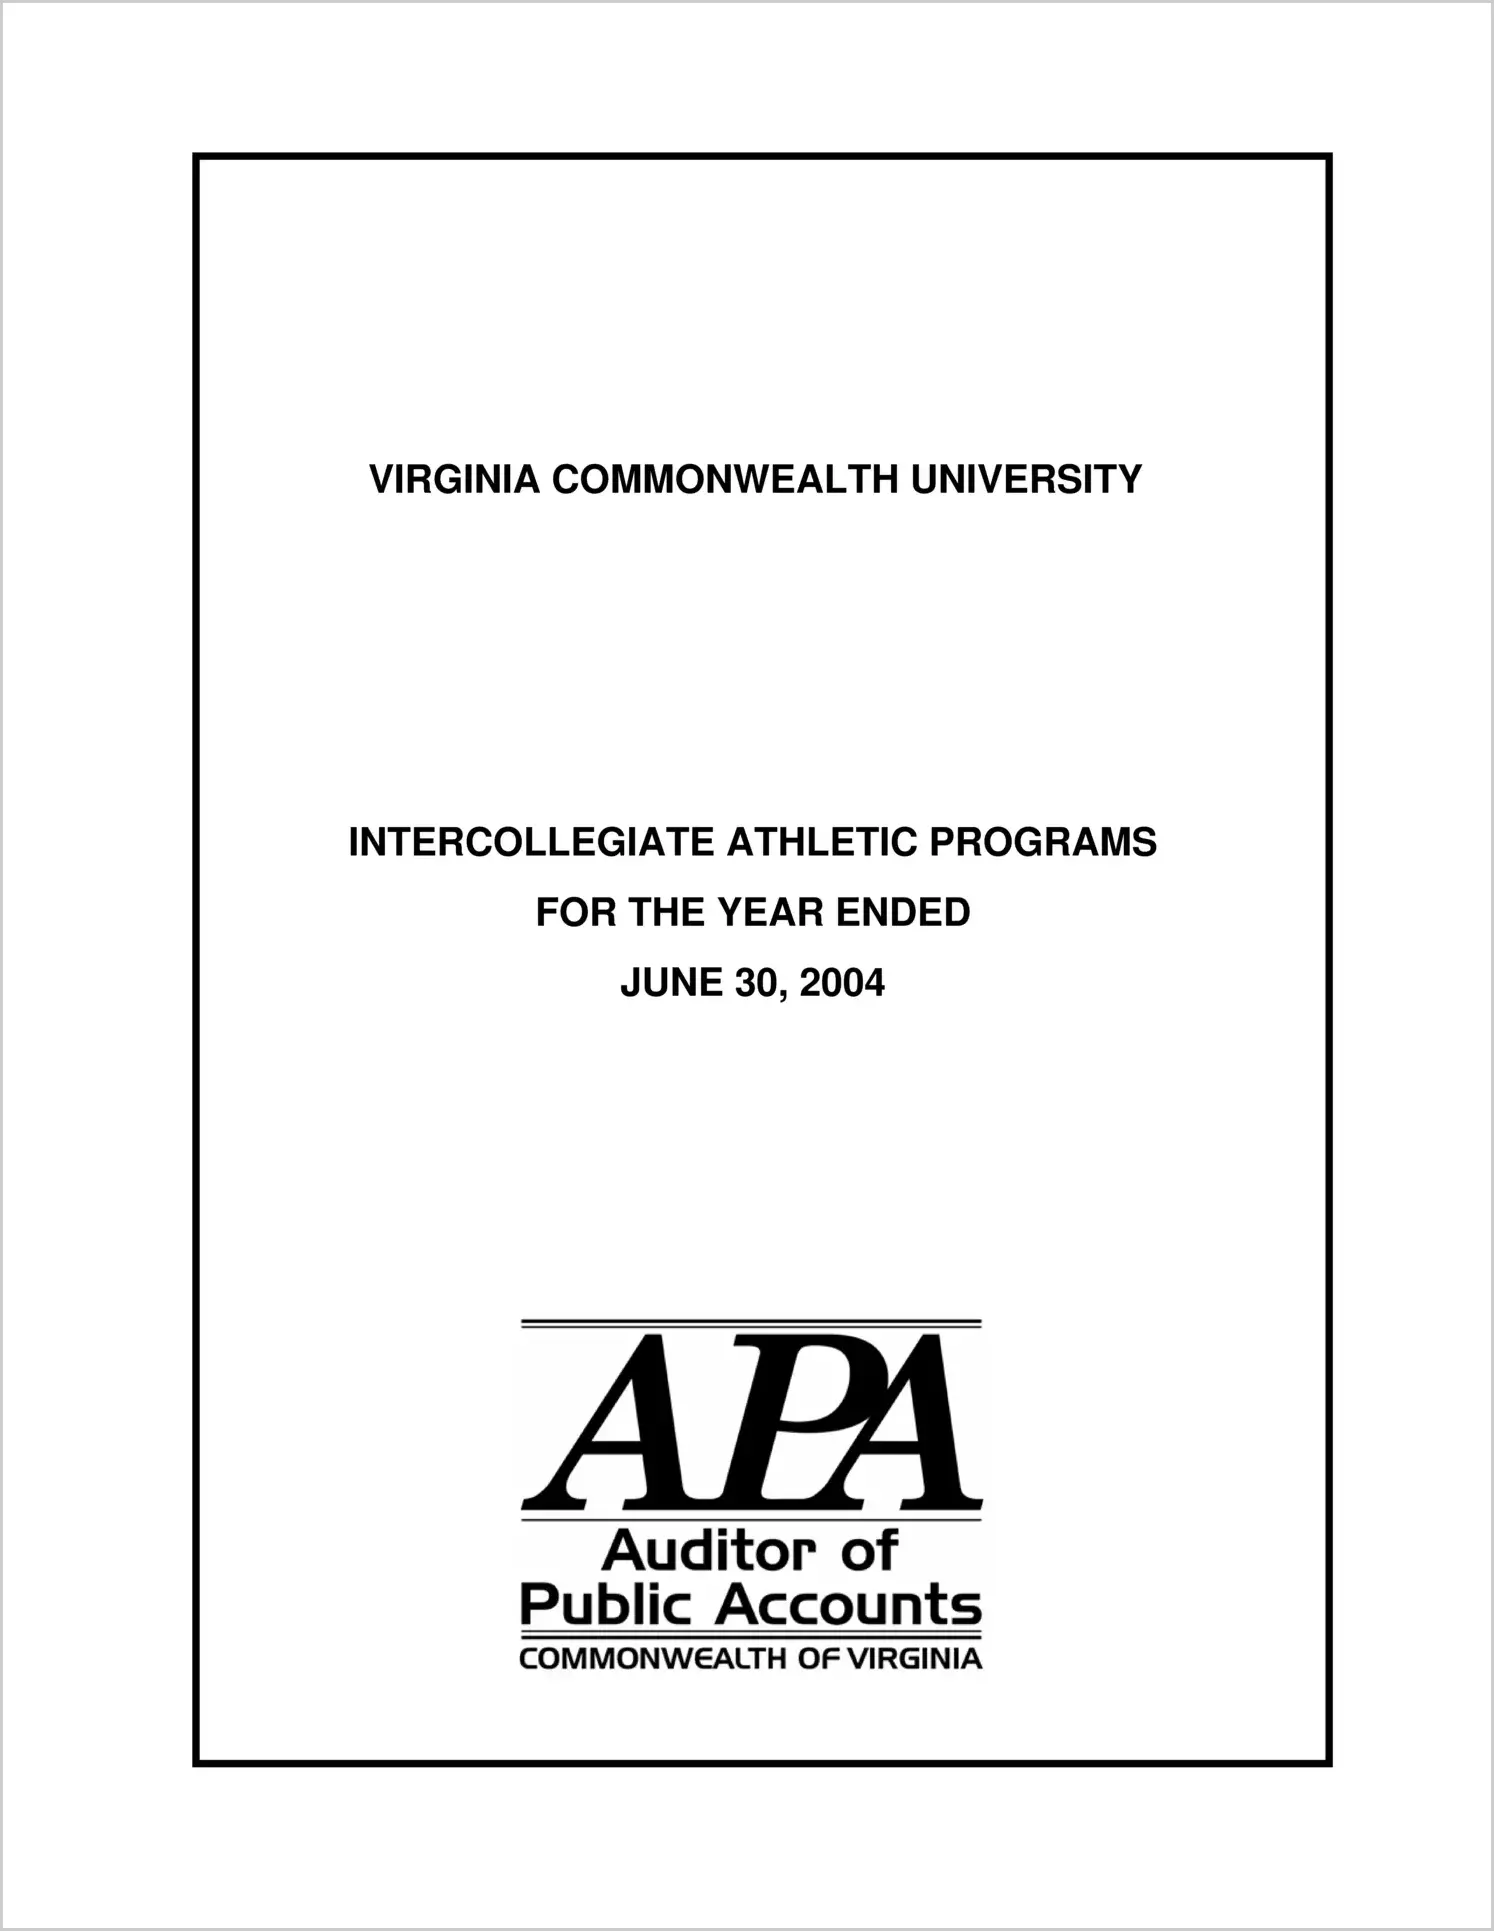 Virginia Commonwealth University Intercollegiate Athletics Programs for the year ended June 30, 2004